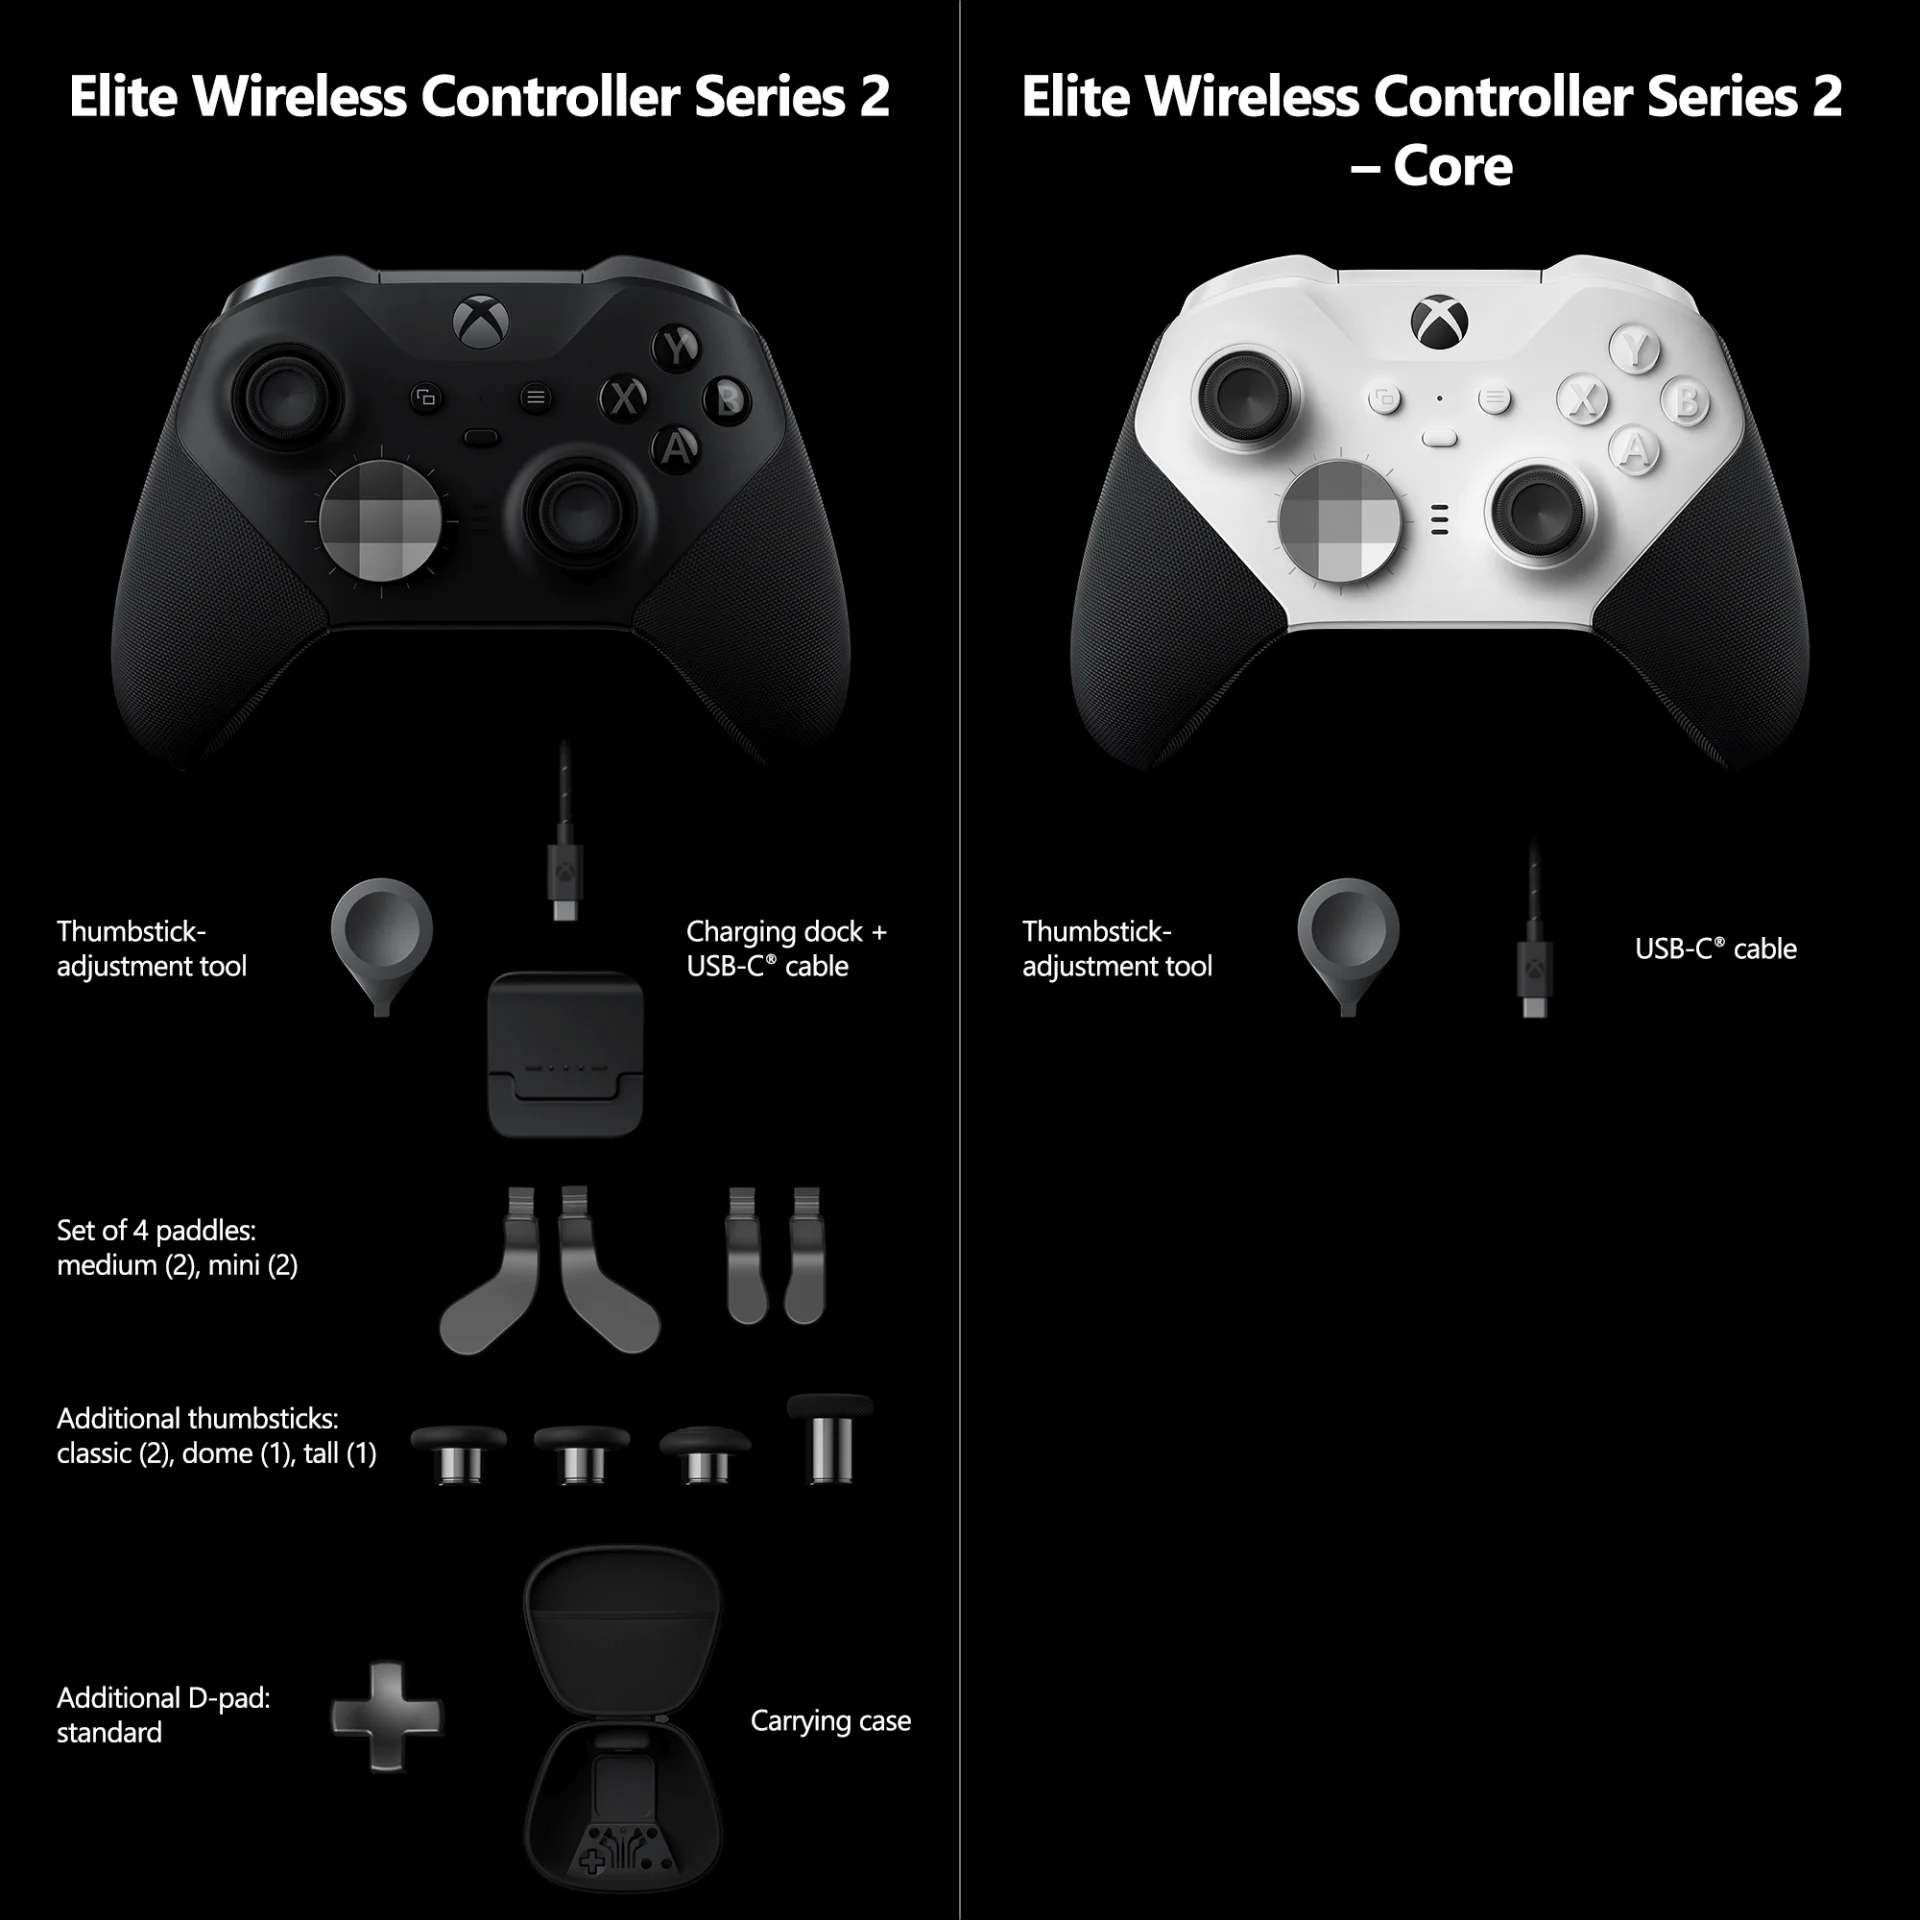 61958603271d168c6d77ae000ea81faa | XBOX | Microsoft เปิดตัว Xbox Elite Wireless Controller Series 2 - Core ราคาเริ่มต้น $129.99 เริ่มวางขาย 21 กันยายนนี้